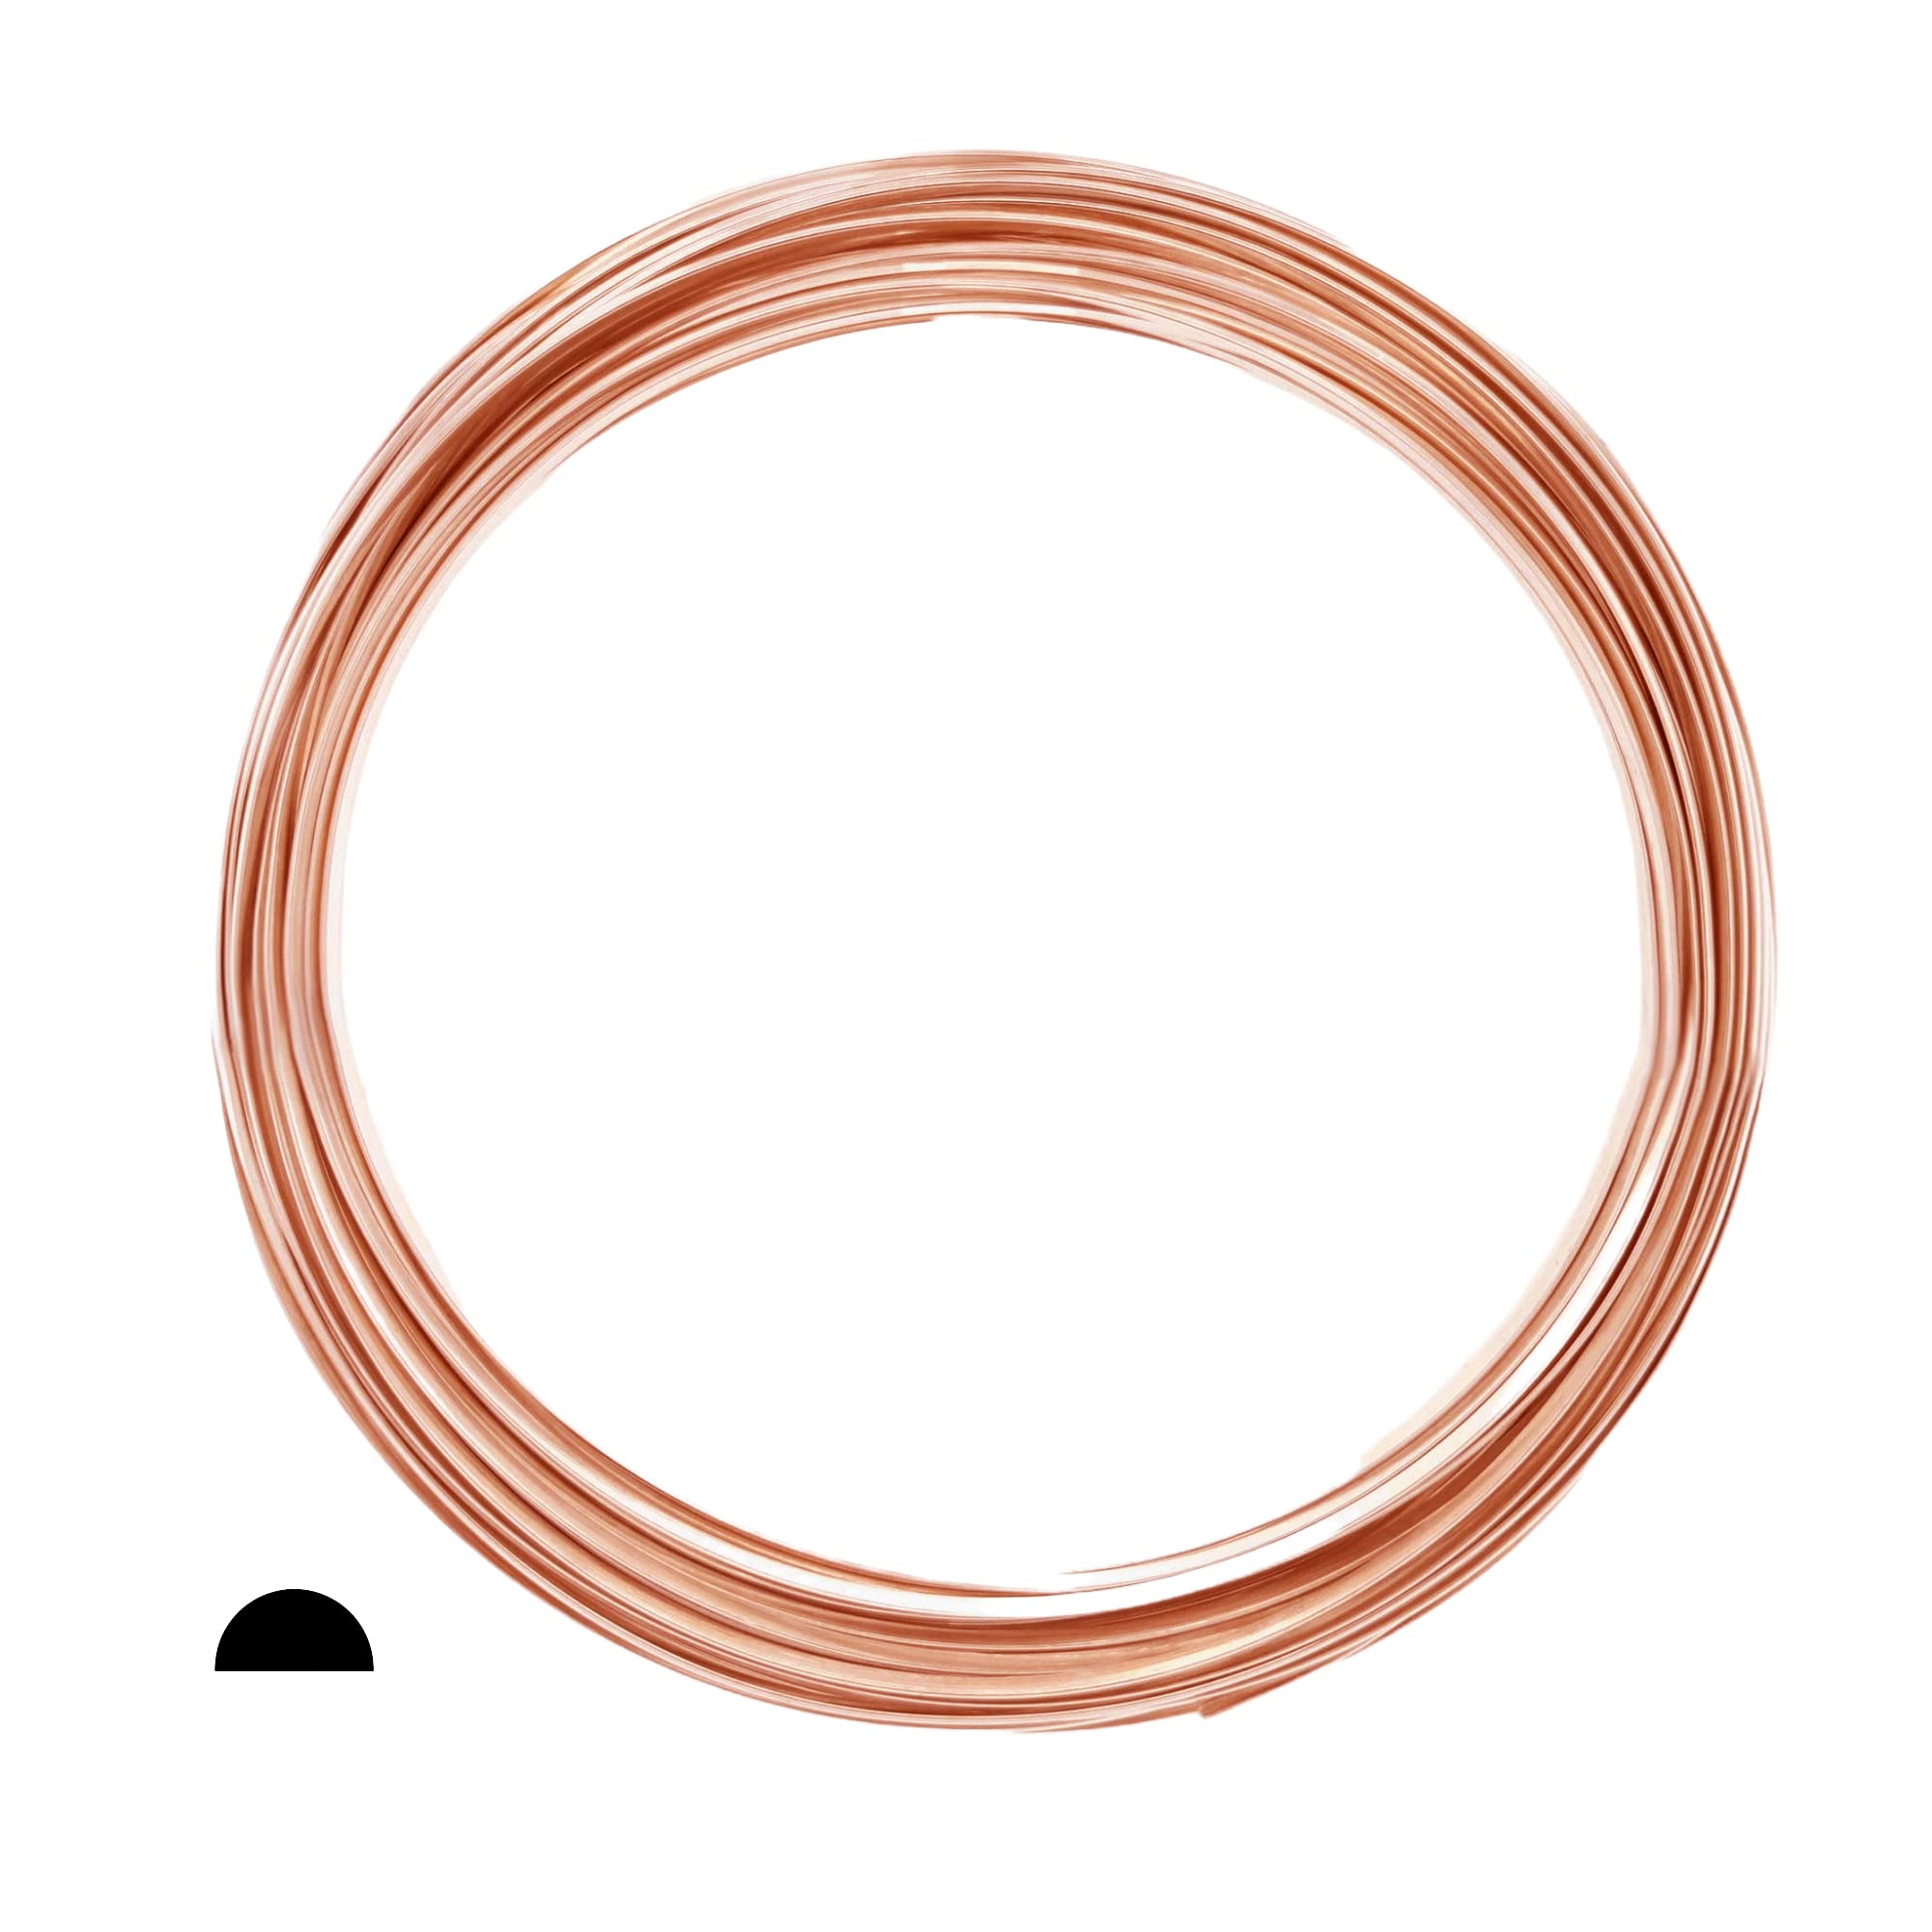 10 Gauge, 99.9% Pure Copper Wire (Half Round) Dead Soft CDA #110 Made in USA - 25ft by Craft Wire